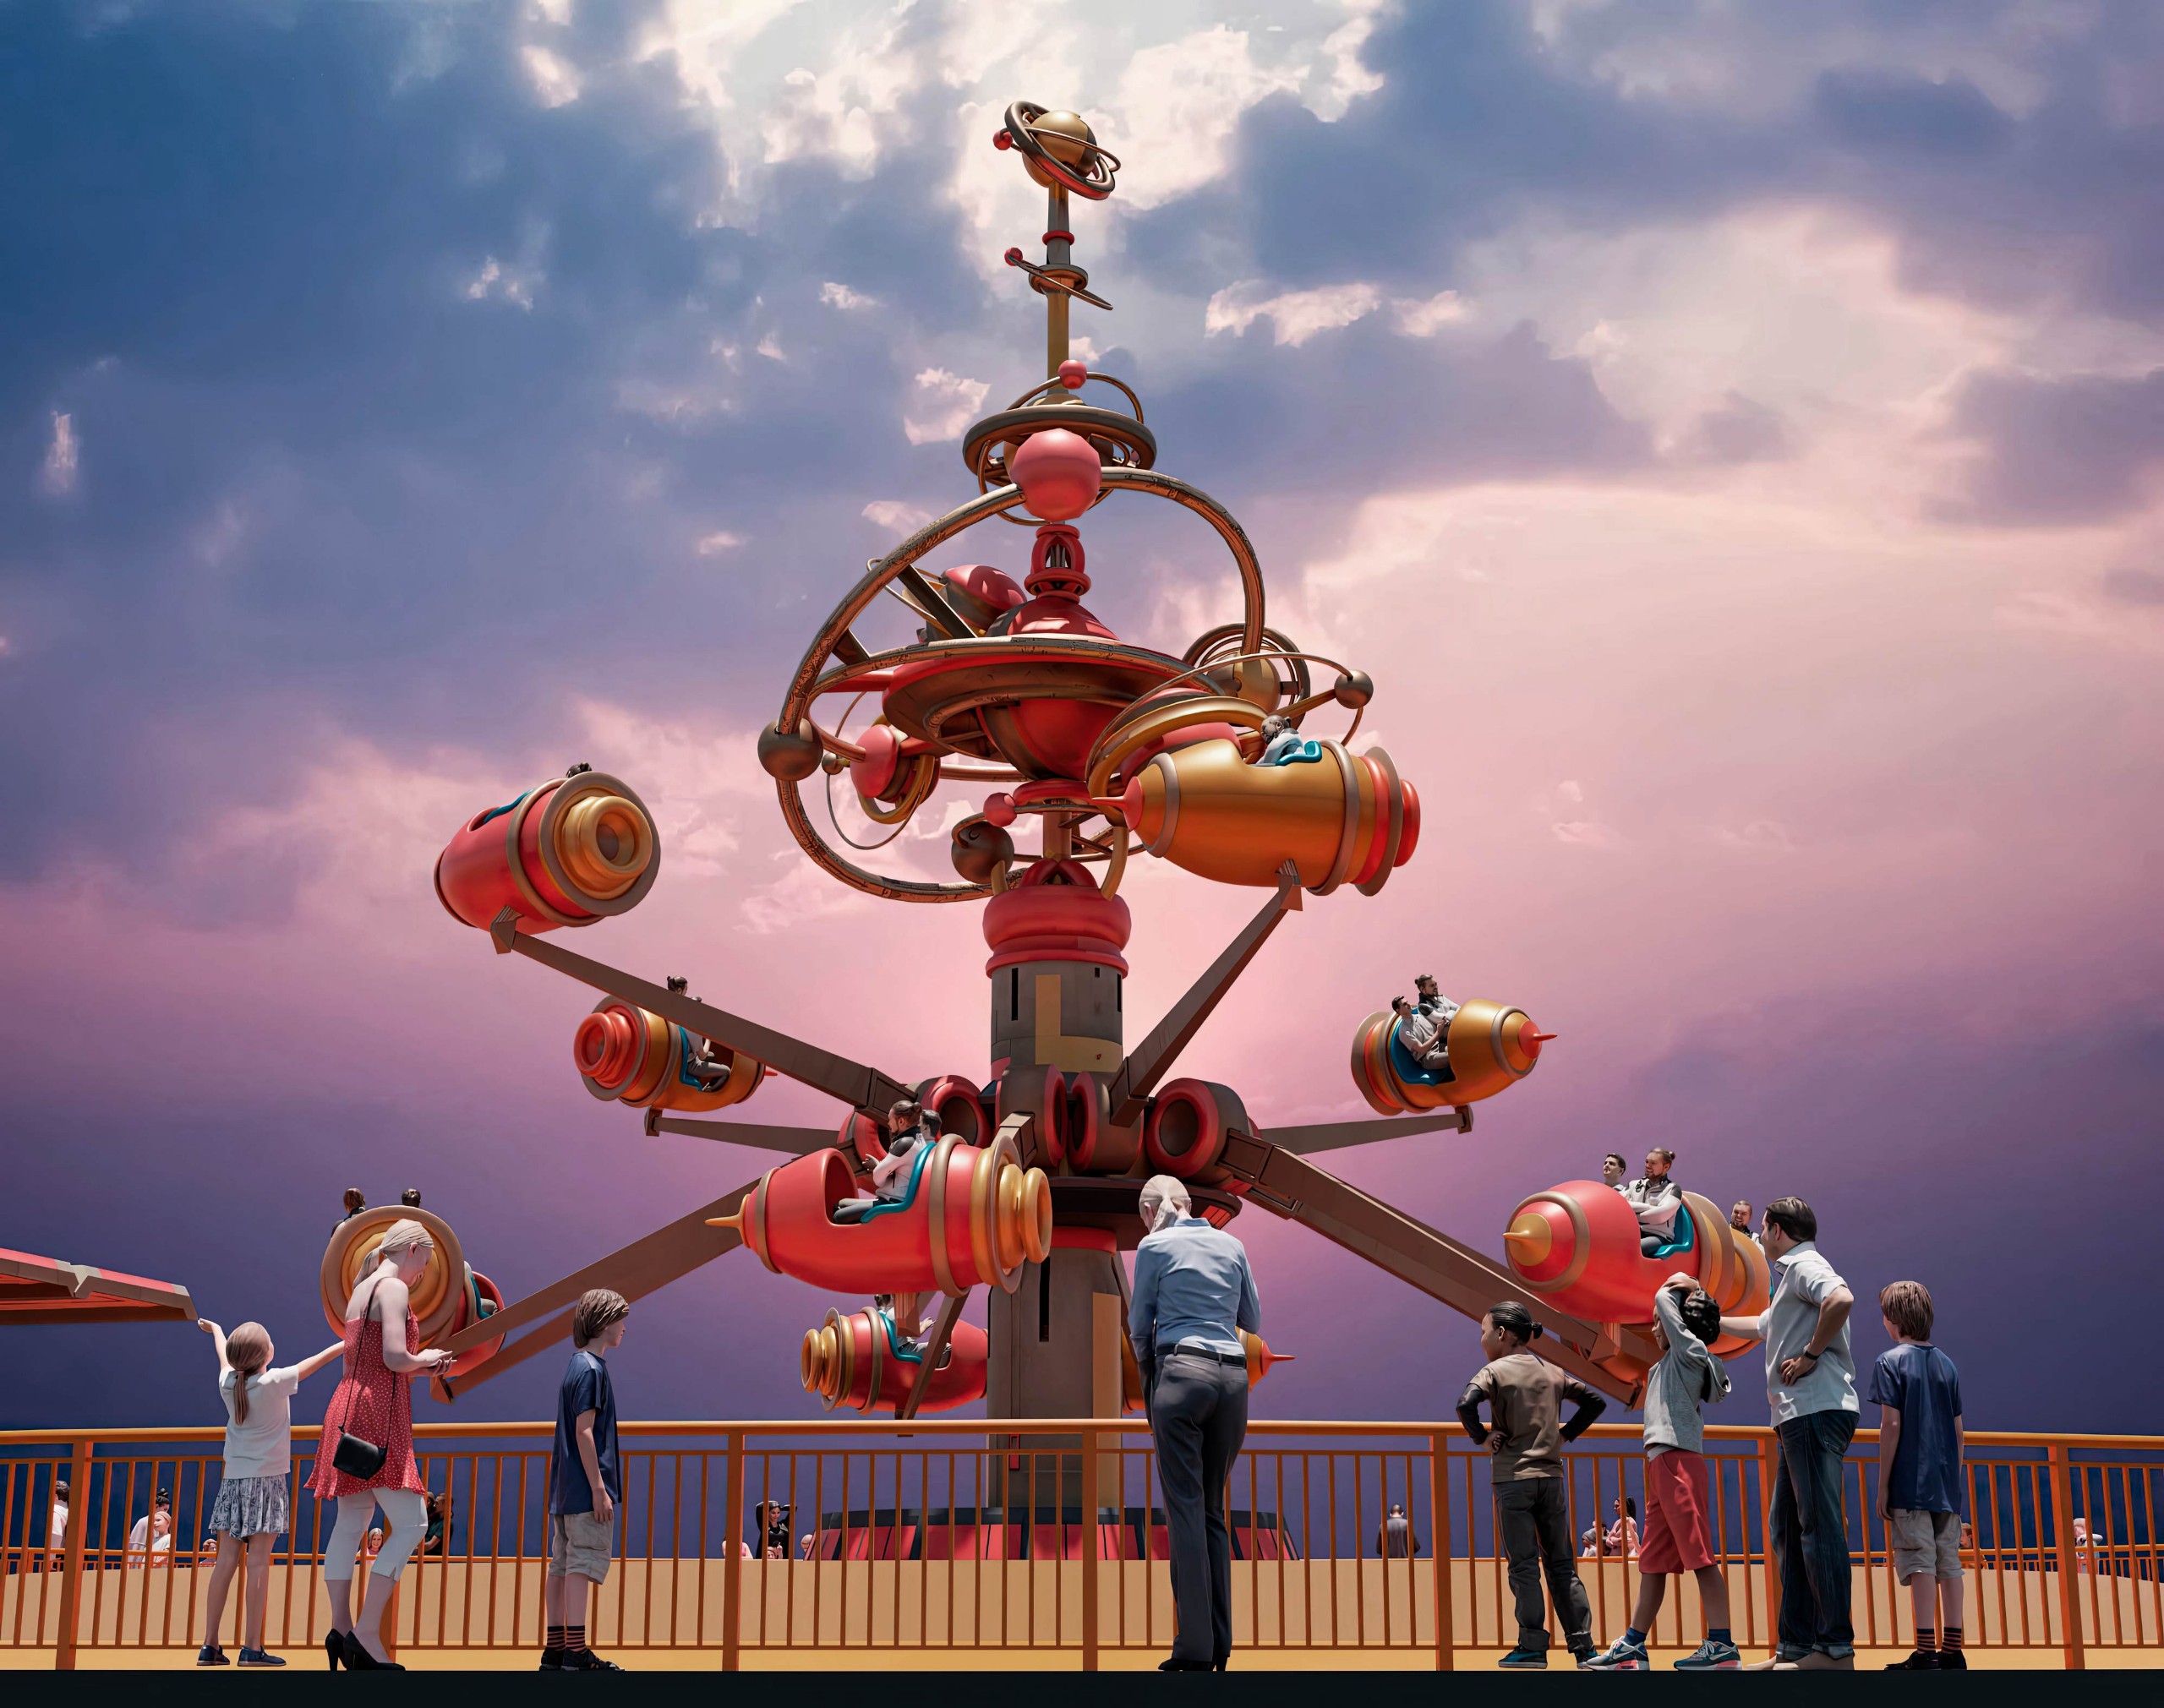 STAR CRUISER RIDE design concepts, theme park spinner ride